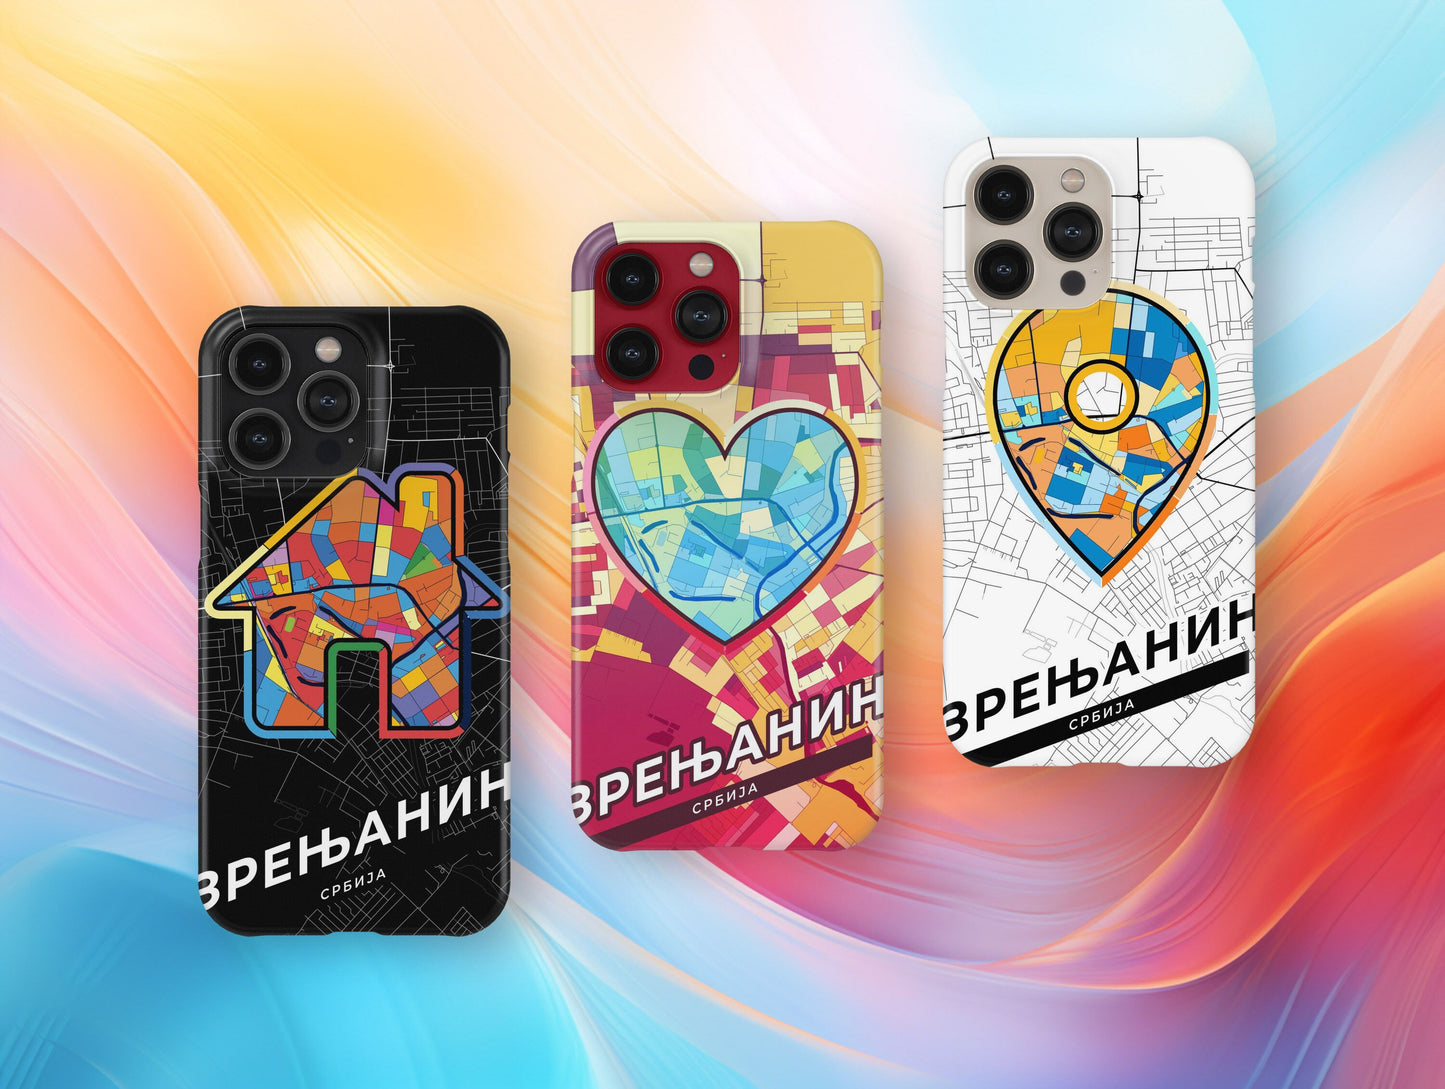 Zrenjanin Serbia slim phone case with colorful icon